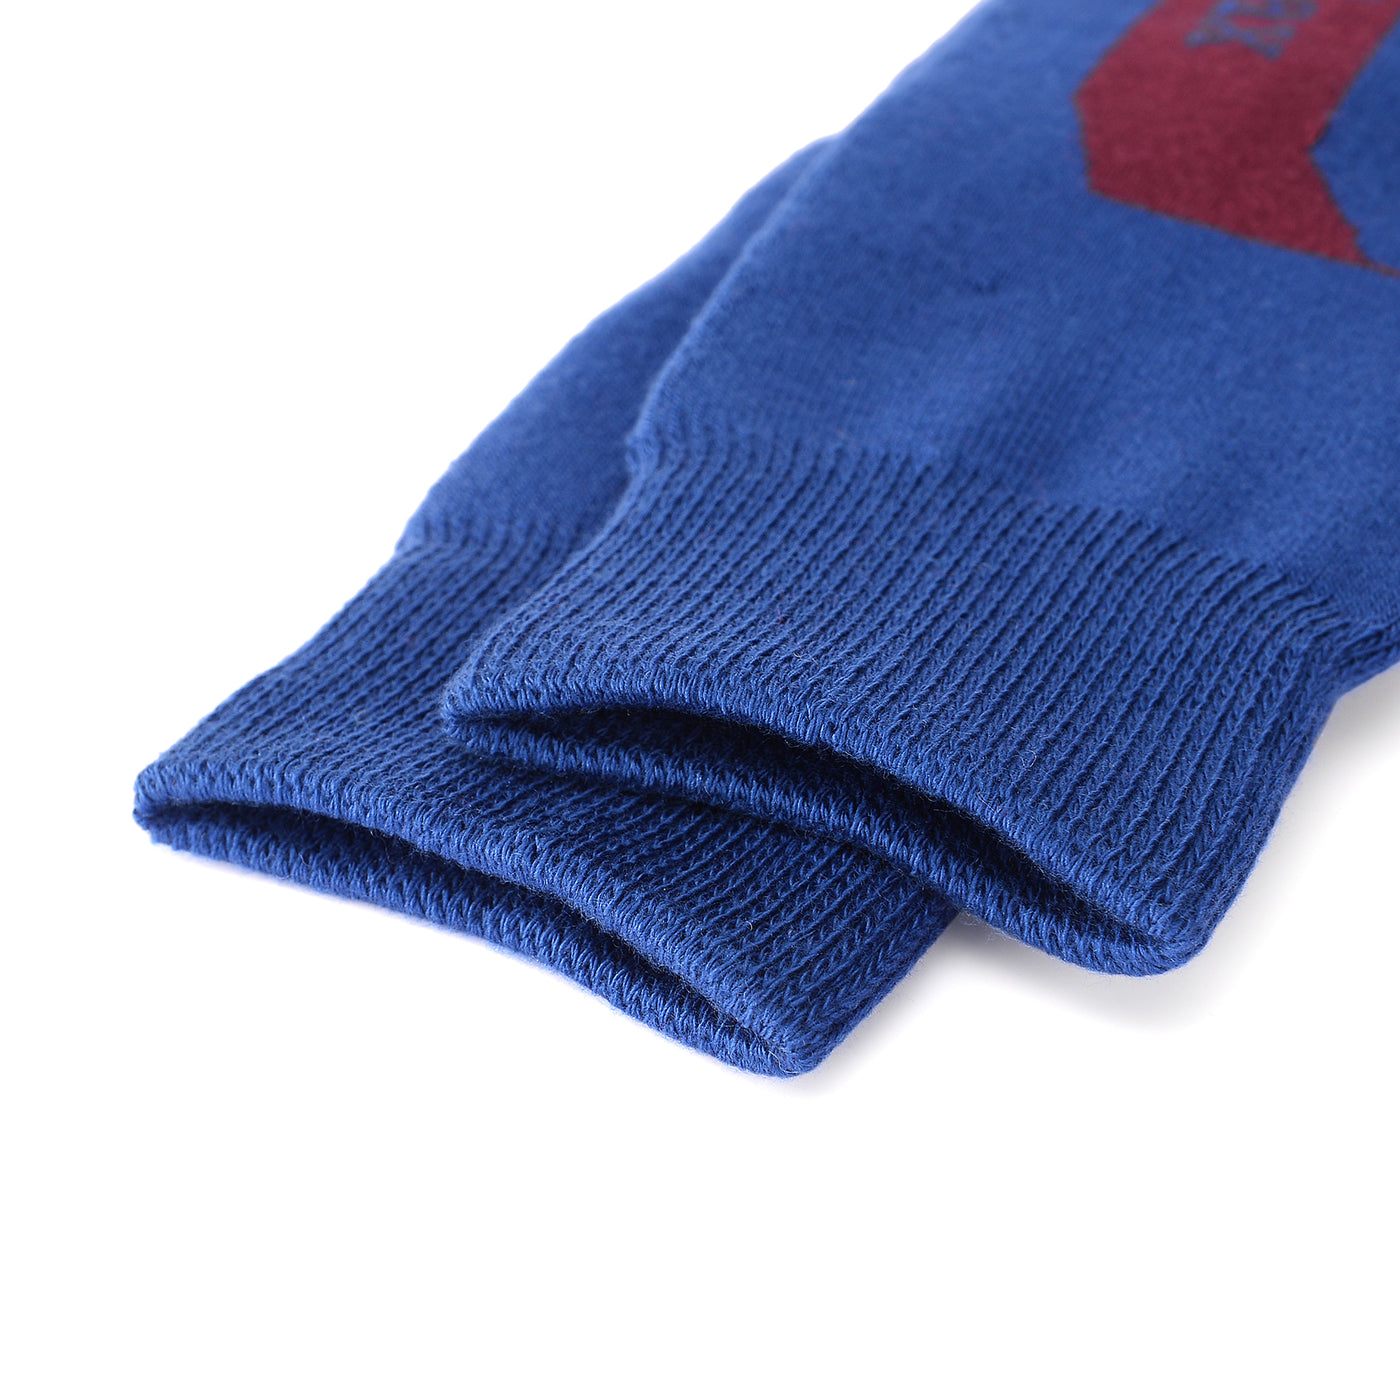 Men's Cashmere-like Soft Long Hose Thermal Winter Ski Socks